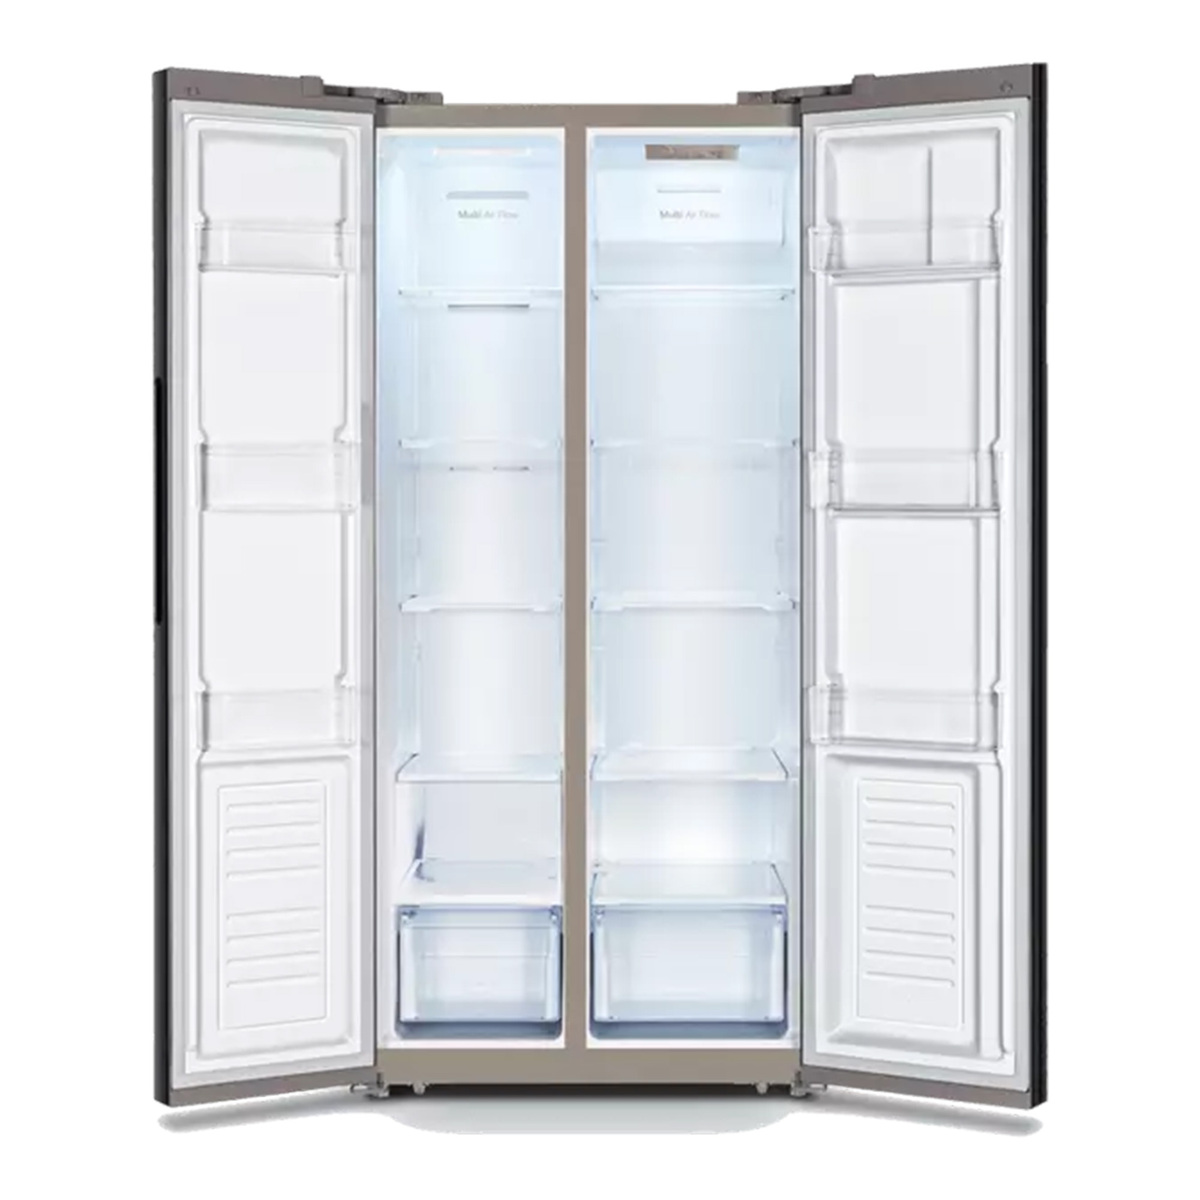 Kelon Side By Side Refrigerator KRS-59WS 567 Litre